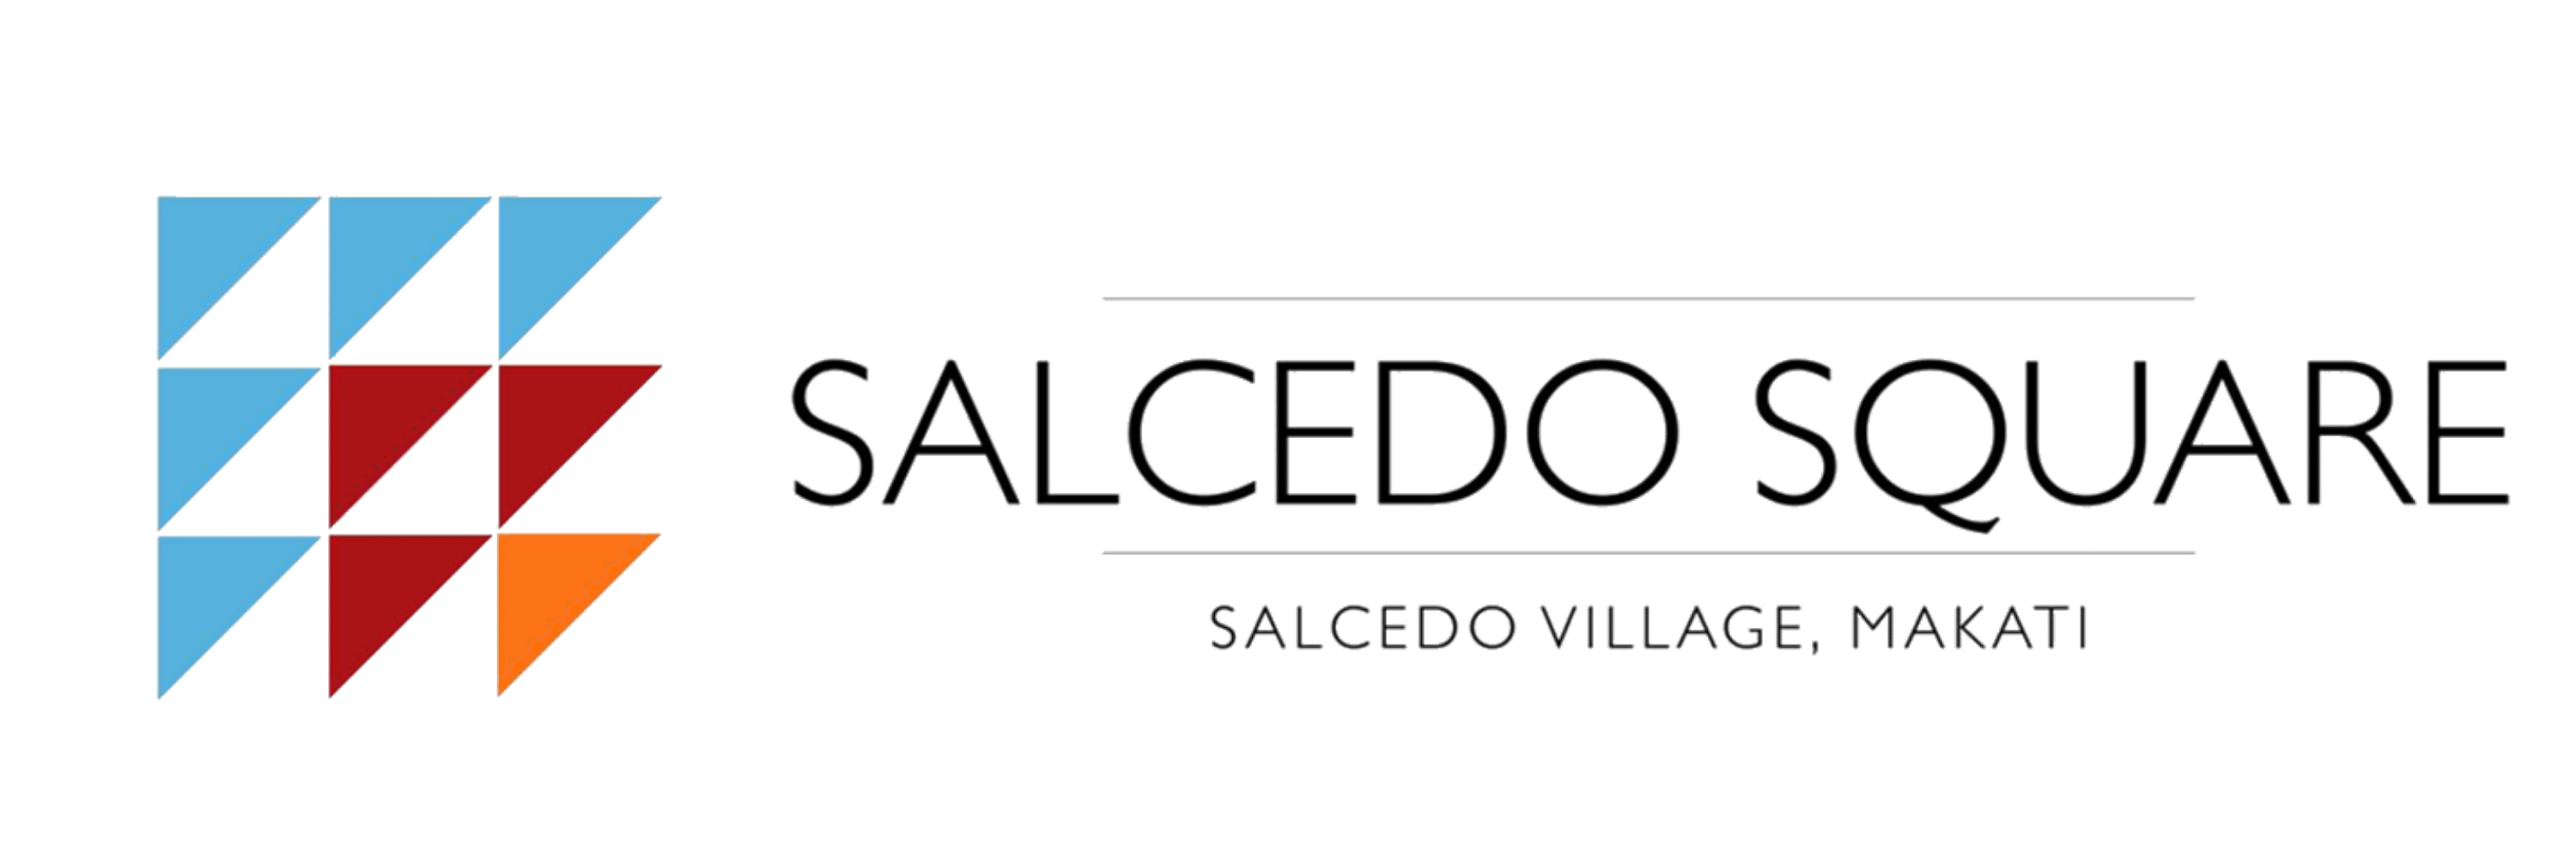 salcedo square banner